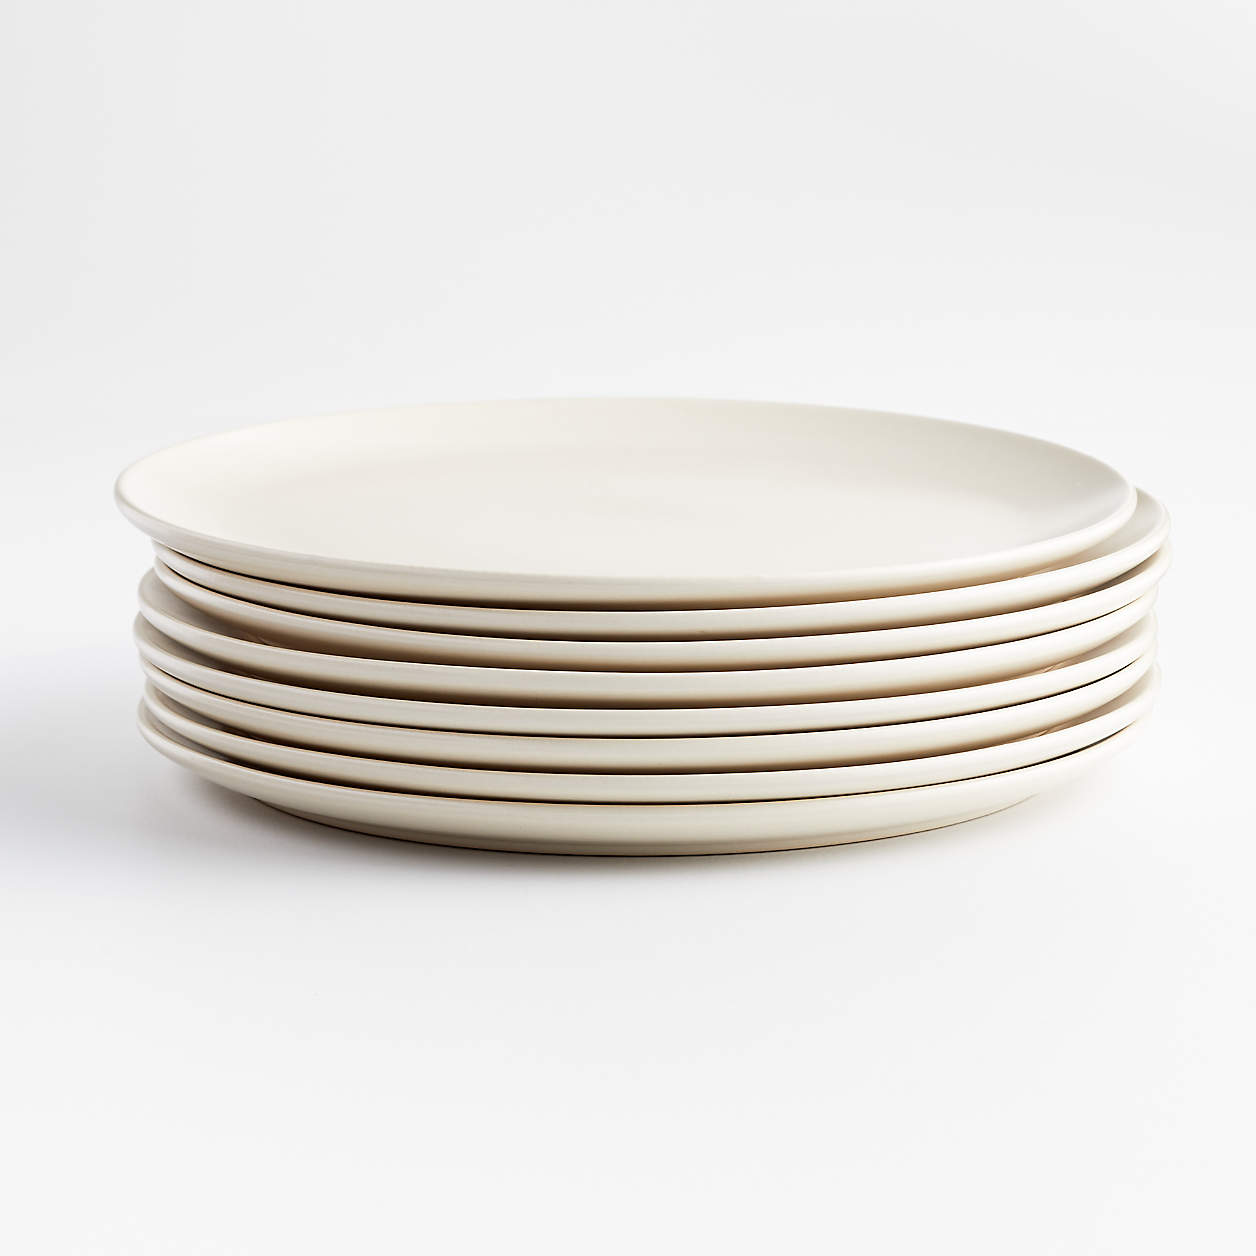 LE TAUCI Pasta Bowls, 42oz Large Salad Bowl, Serving Plate House-warming  Wedding Gift, Ceramic Embossment Stoneware Bowl for Fruits, Noodle, Dinner  